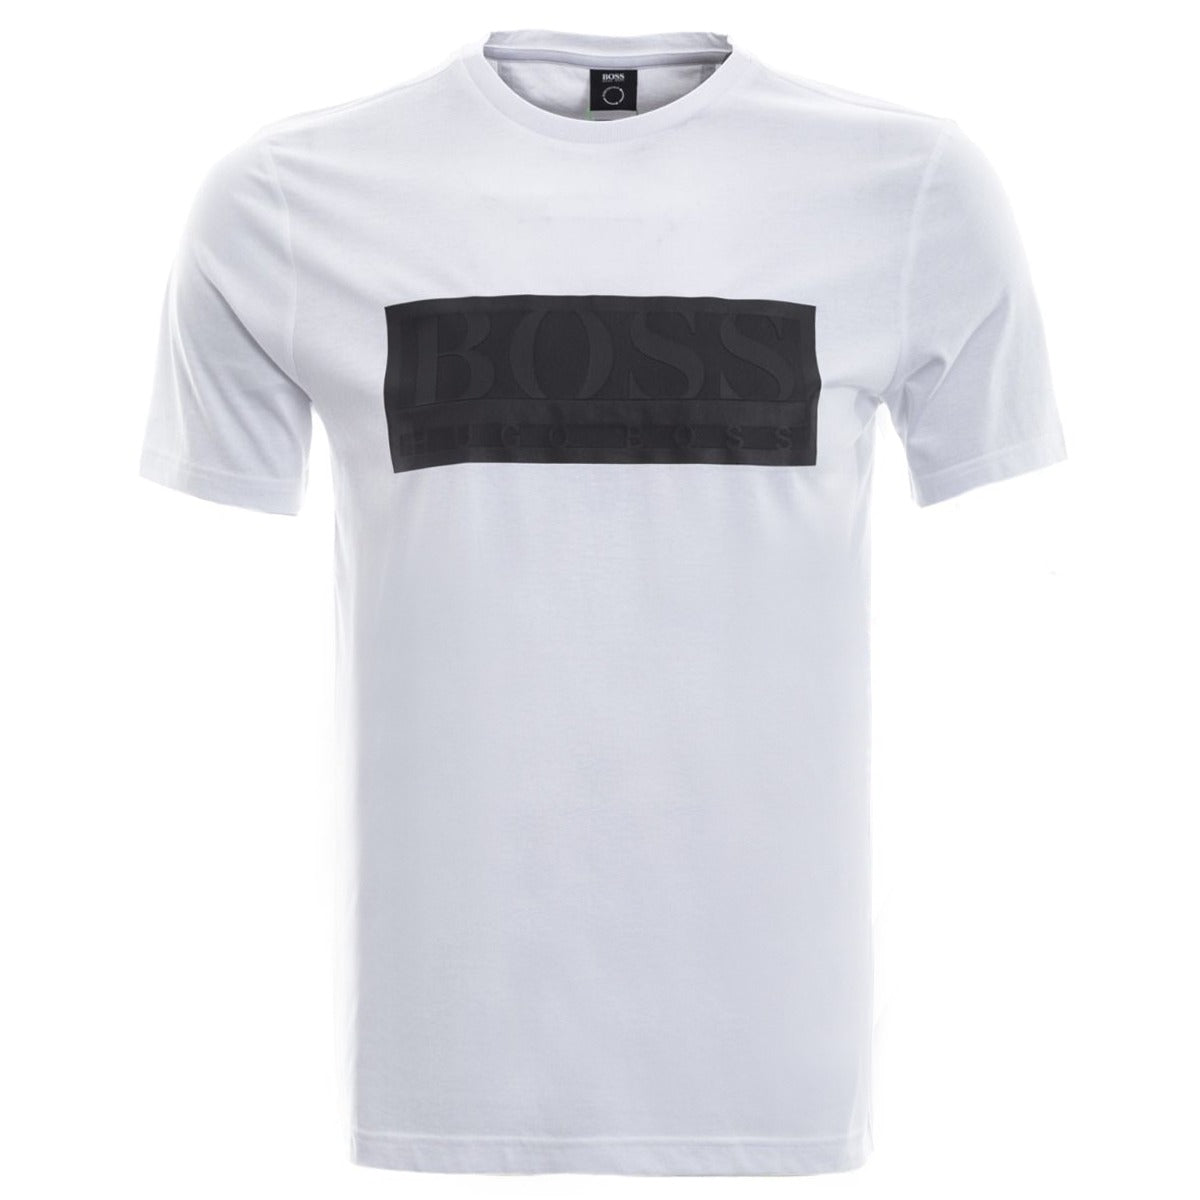 BOSS Tee Batch 1 T Shirt in White Main